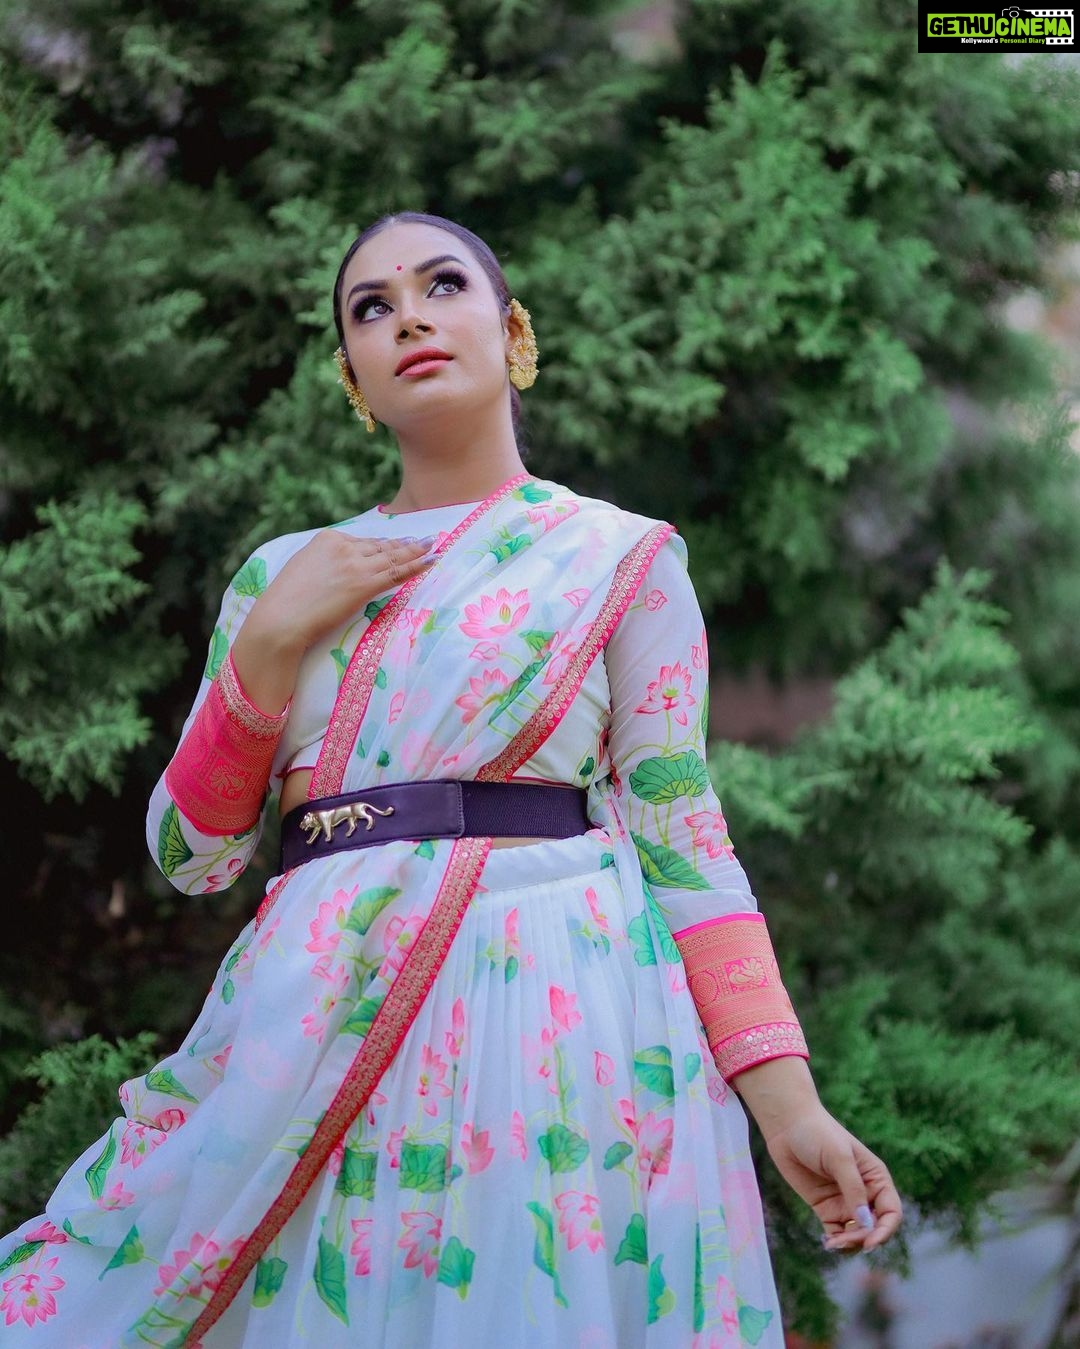 Hari Teja Instagram - Bhoomi turns one ❤️ Video & Pc credits : @relivevisuals @whoisindrasena ❤️ Decoration: @occasionsbysudhadatla